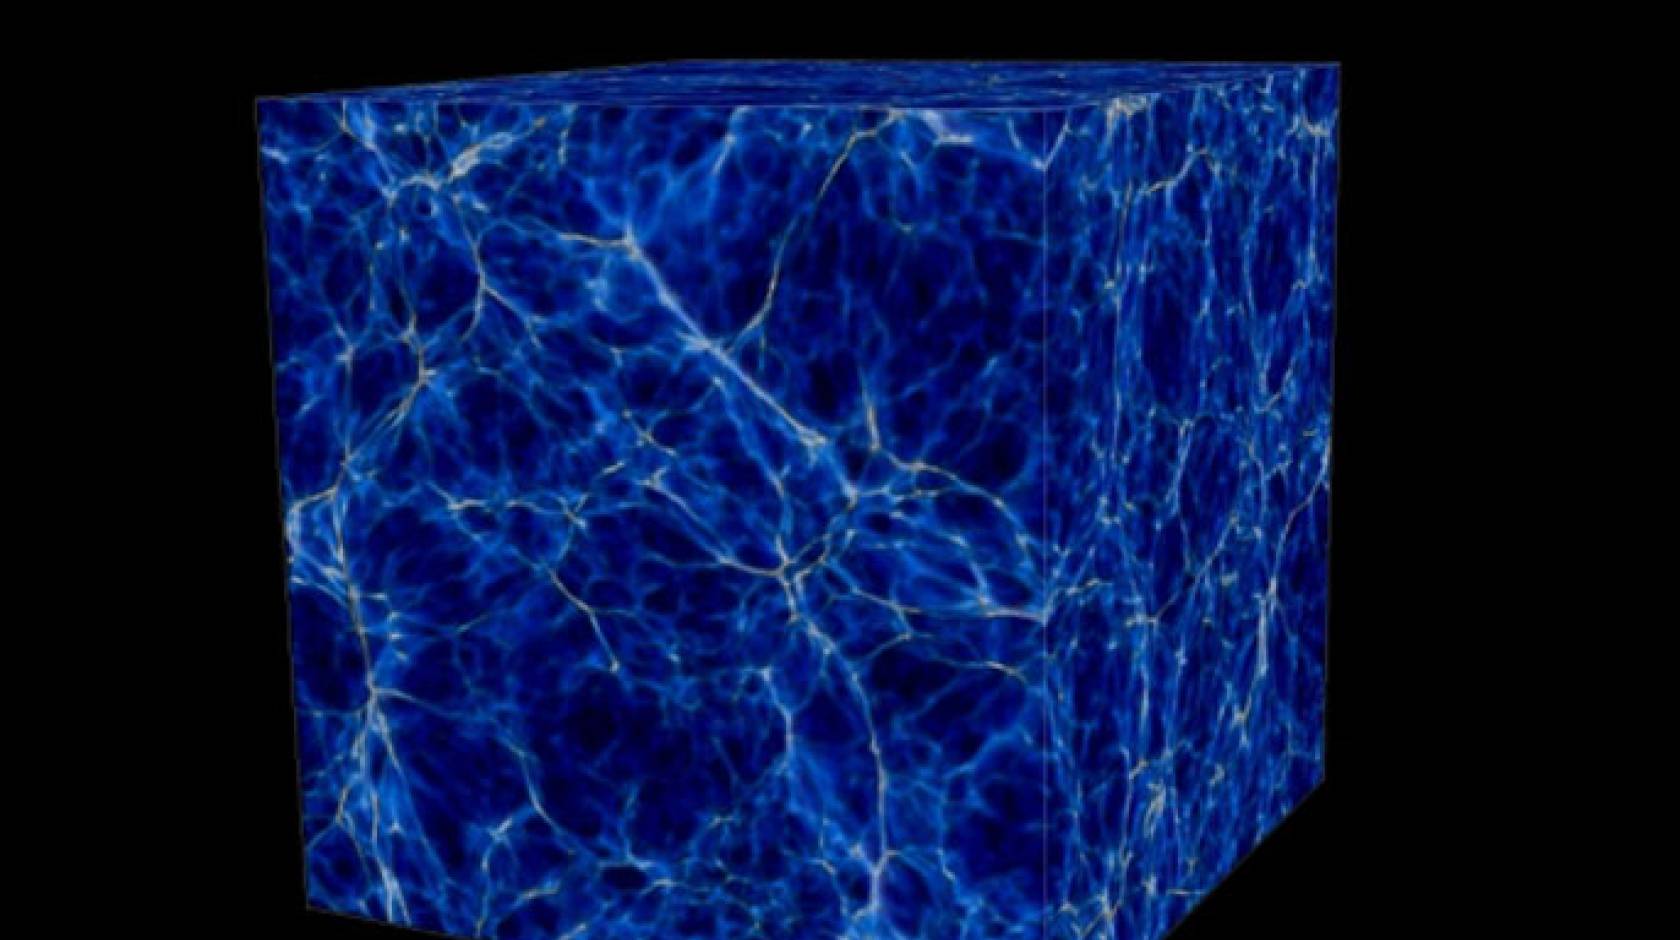 UC Santa Barbara cosmic web